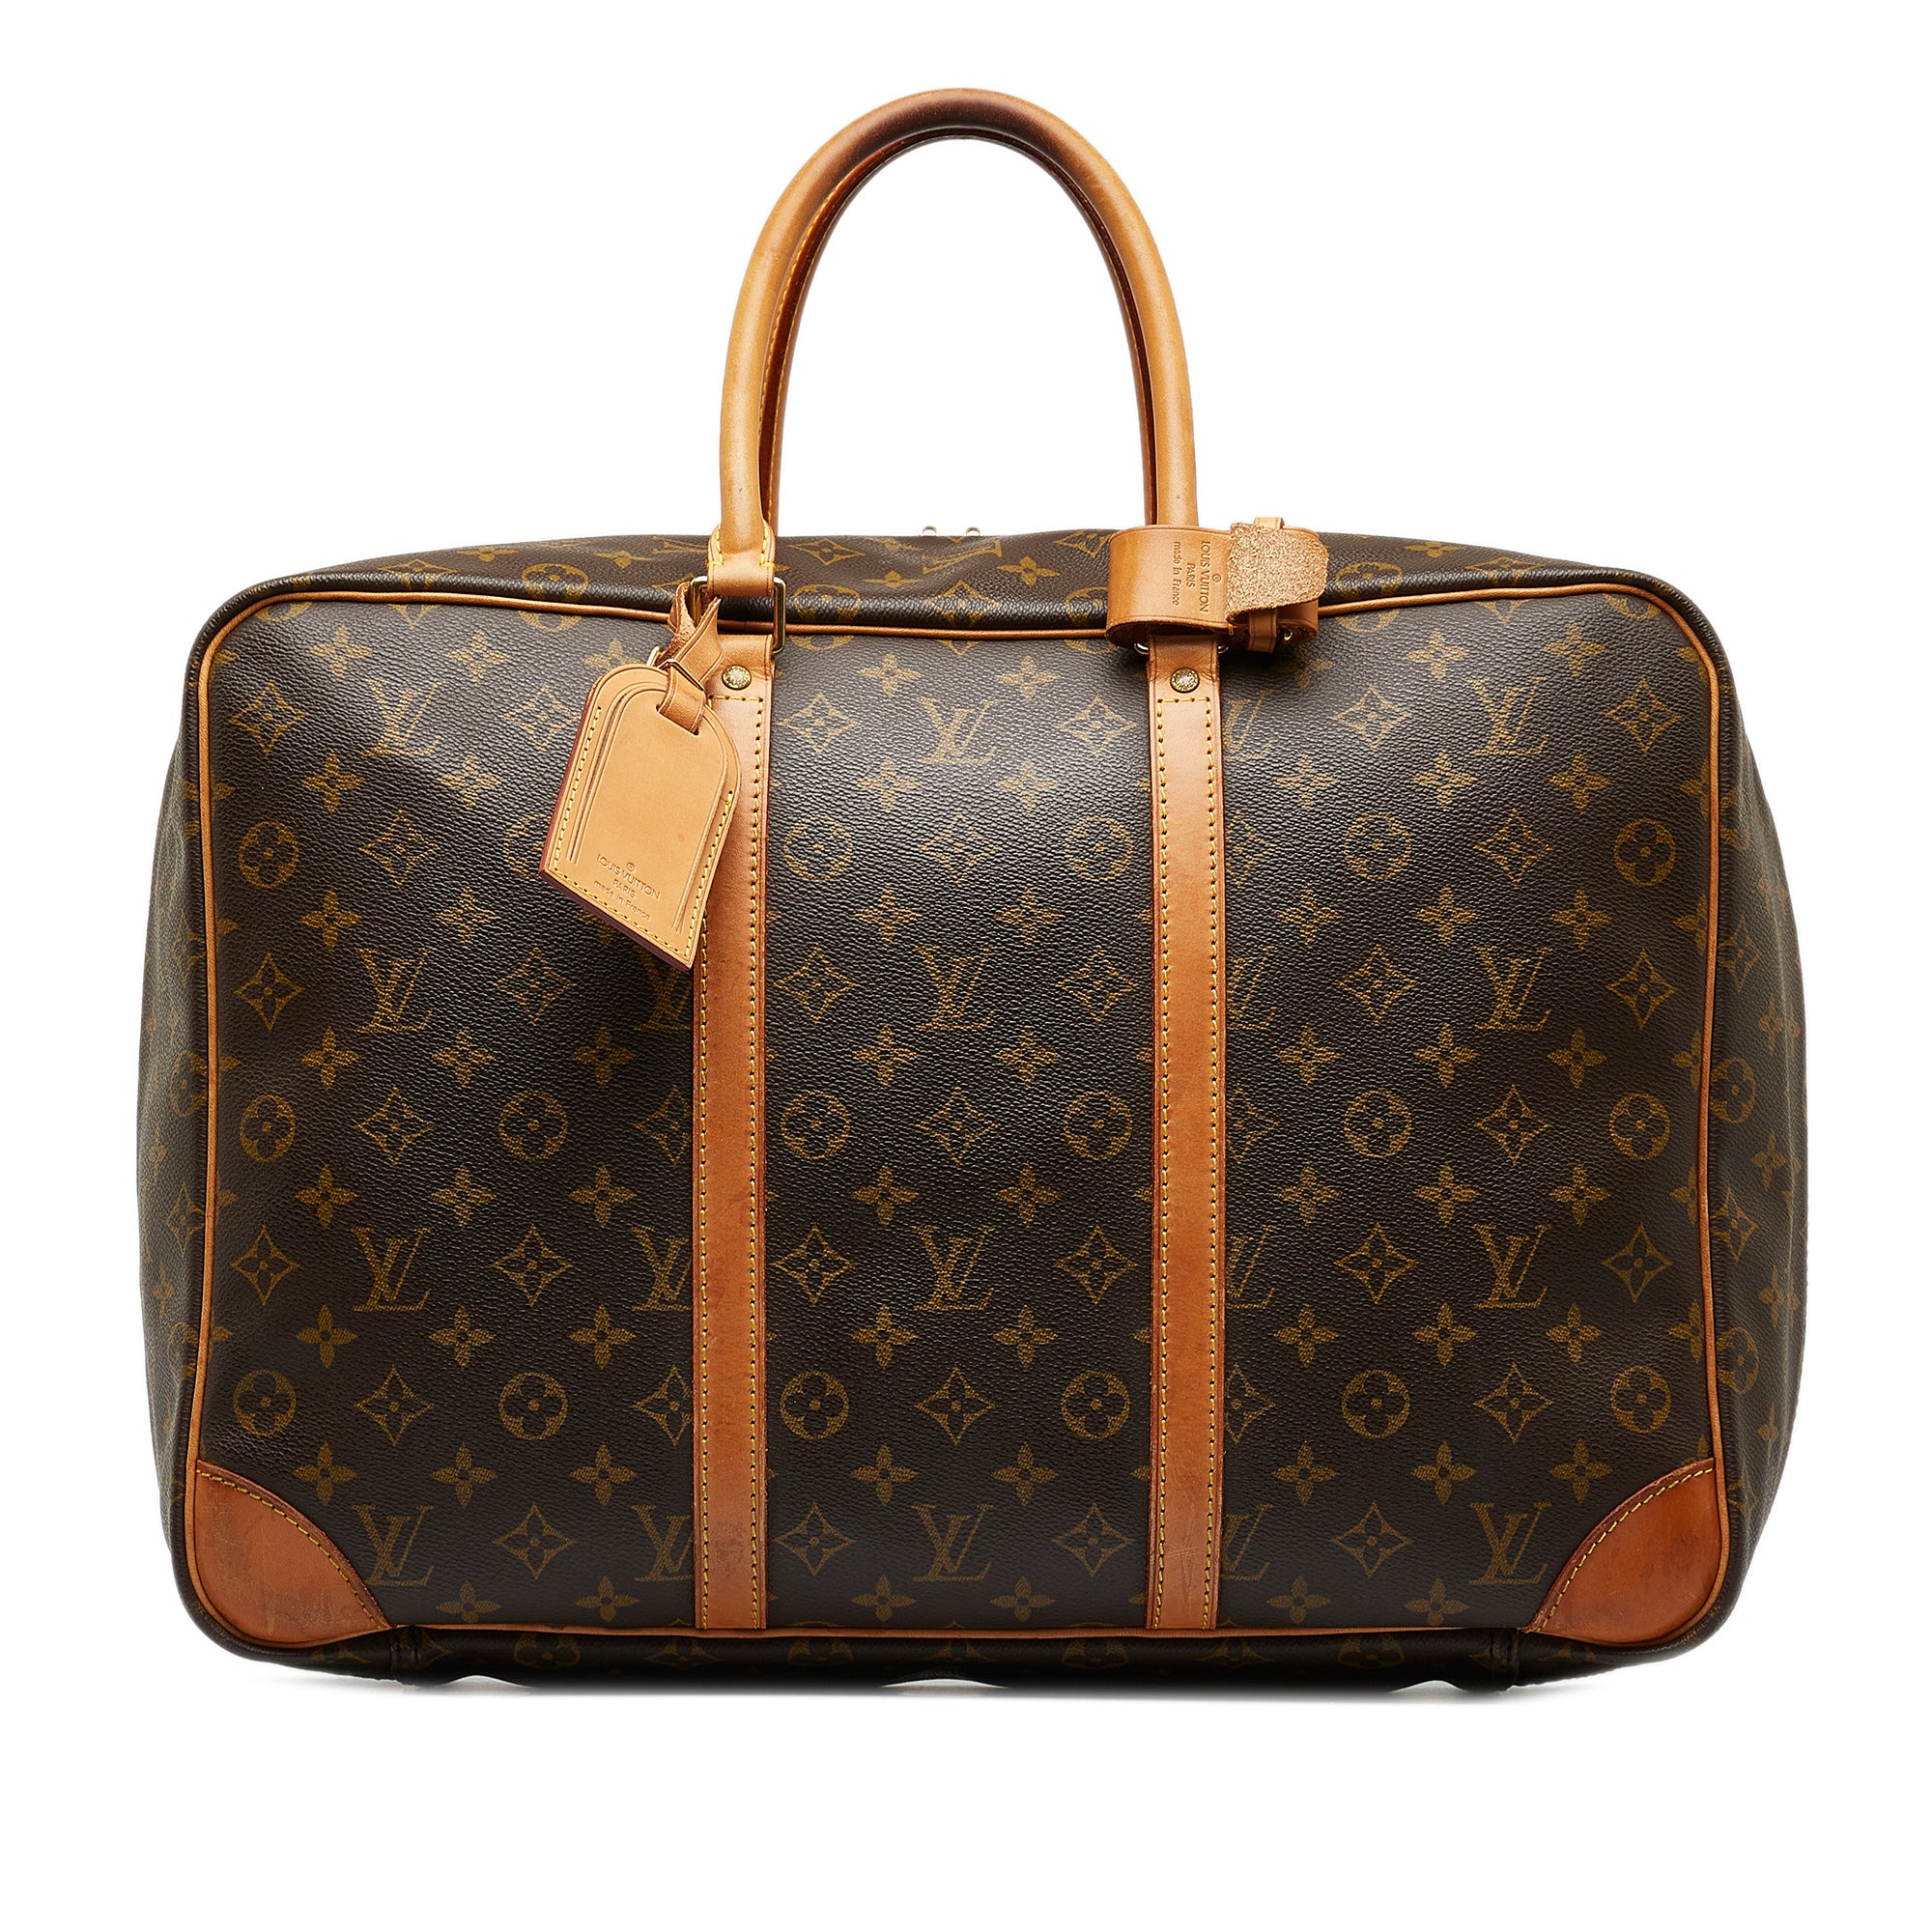 LOUIS VUITTON Sirius 50 Monogram Canvas Suitcase Travel Bag Brown